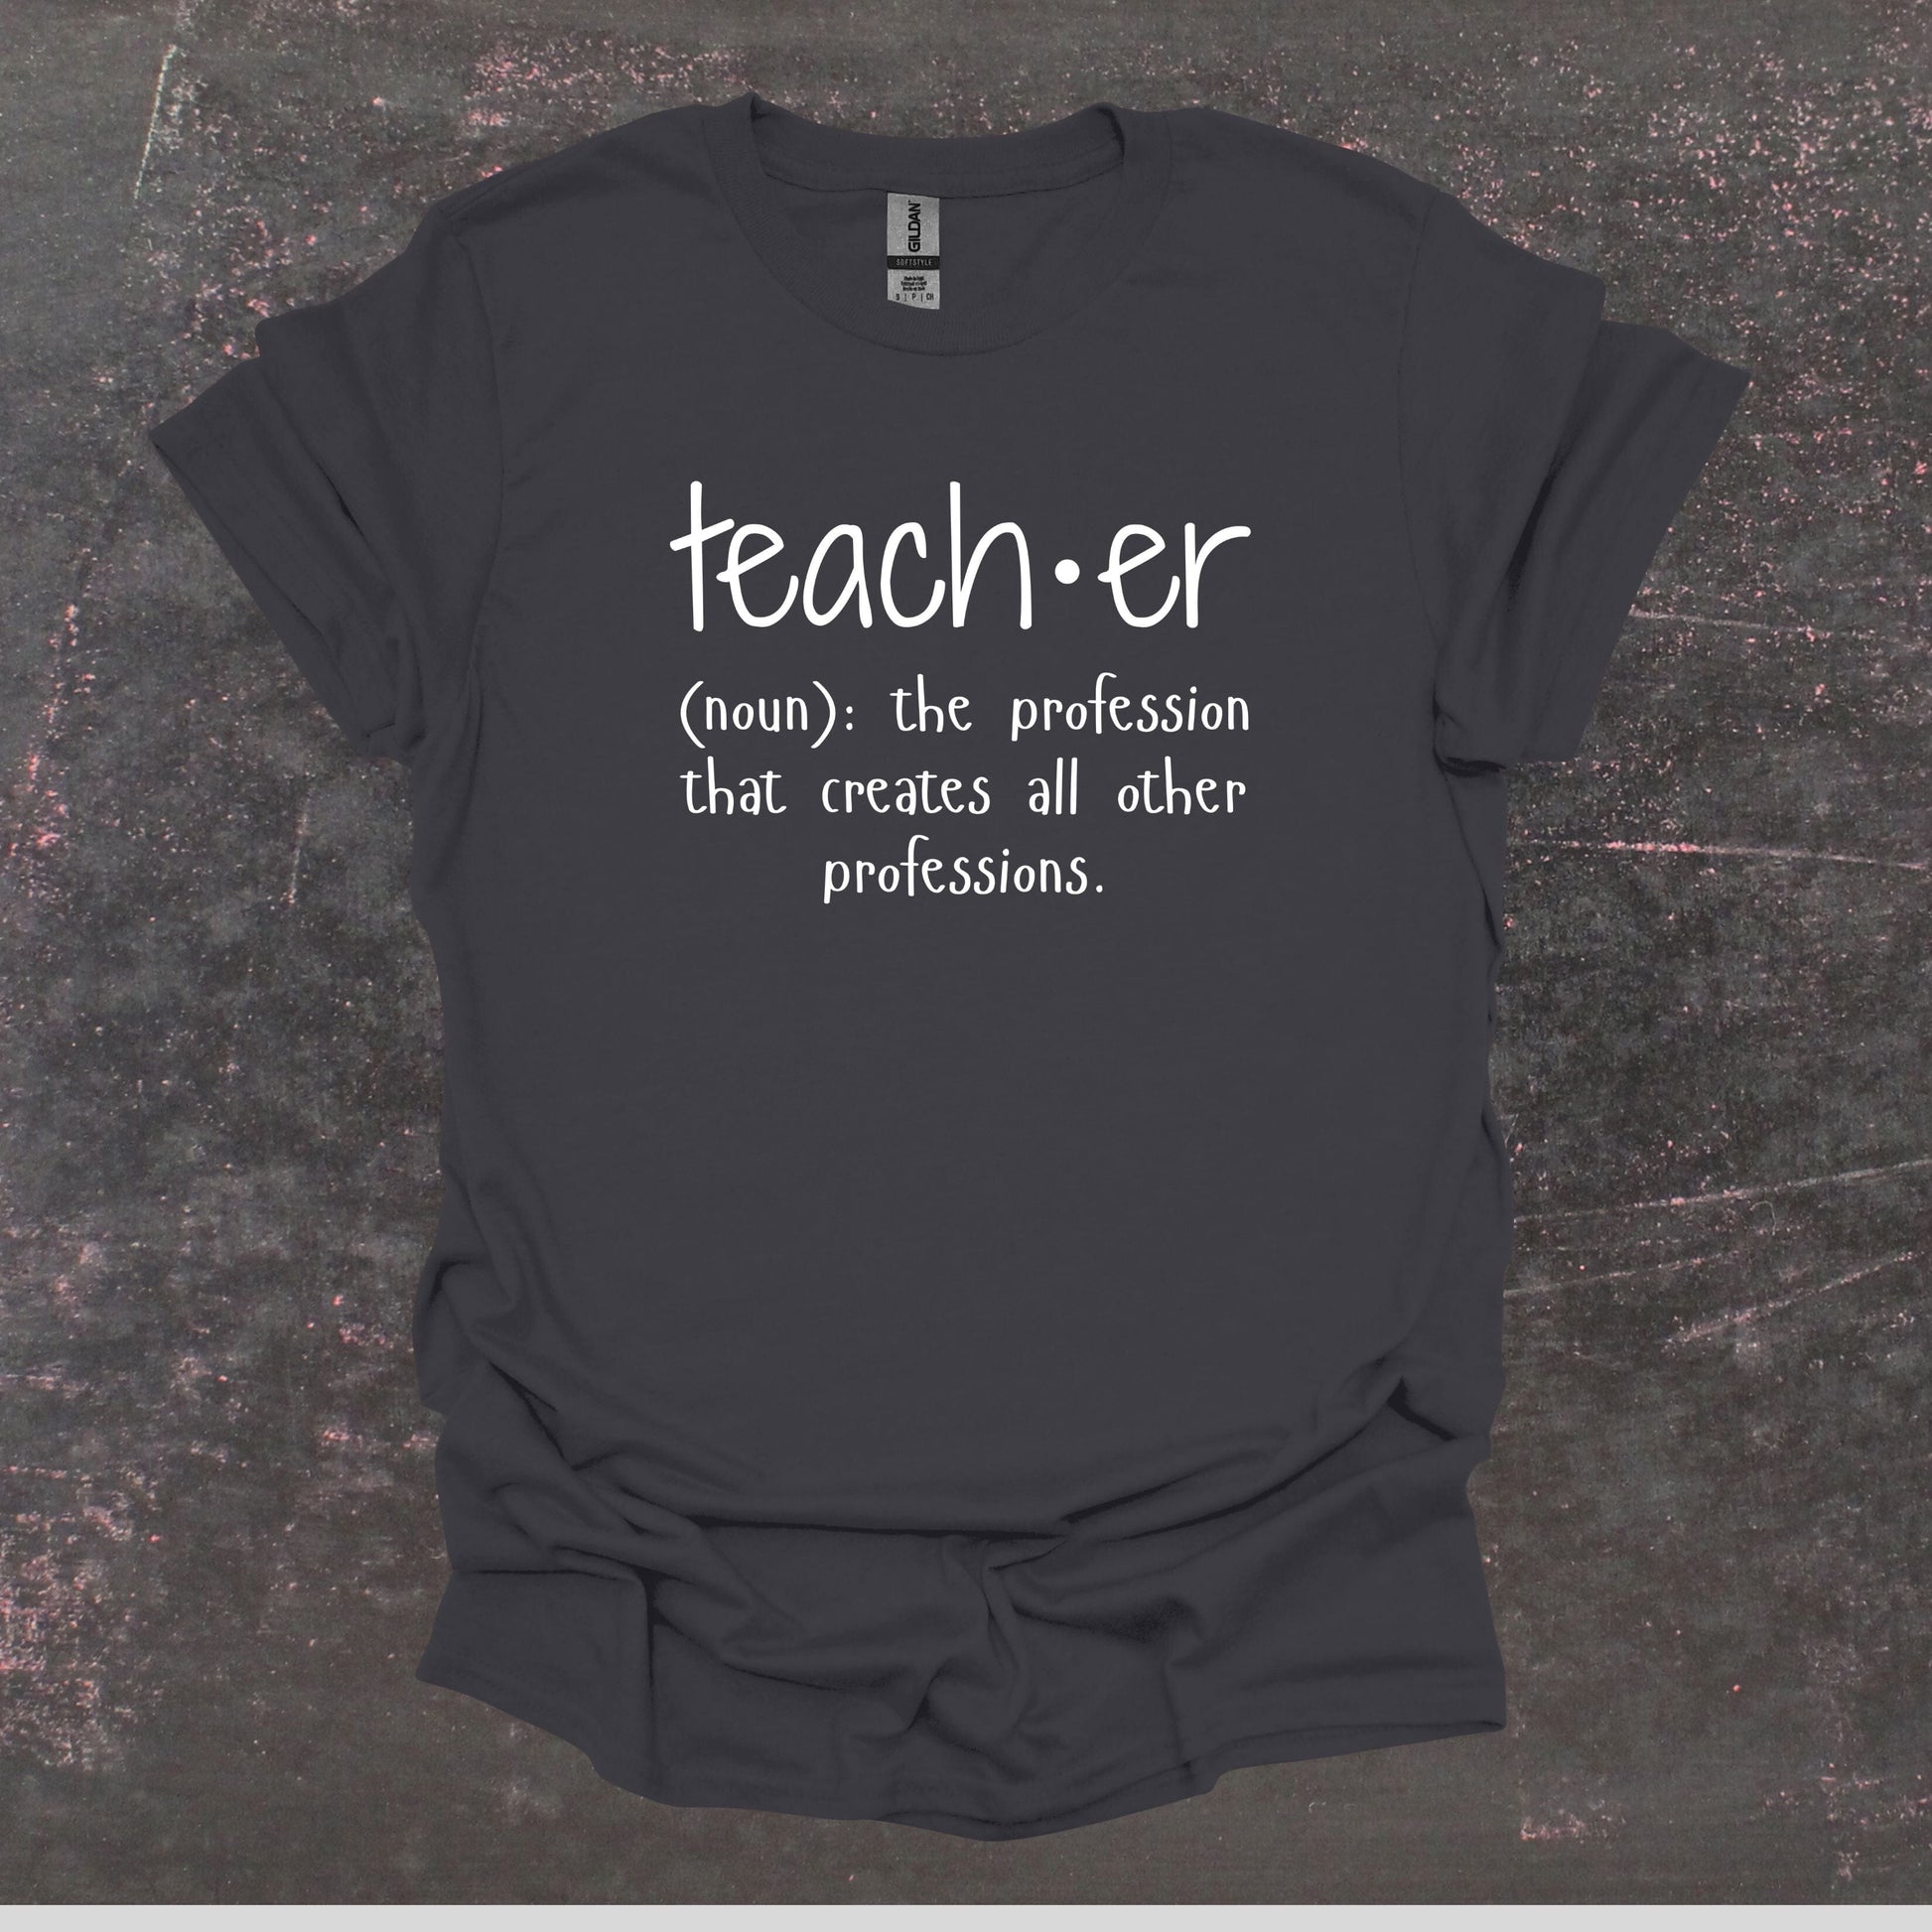 Teacher Definition - Teacher T Shirt - Adult Tee Shirts T-Shirts Graphic Avenue Charcoal Adult Small 